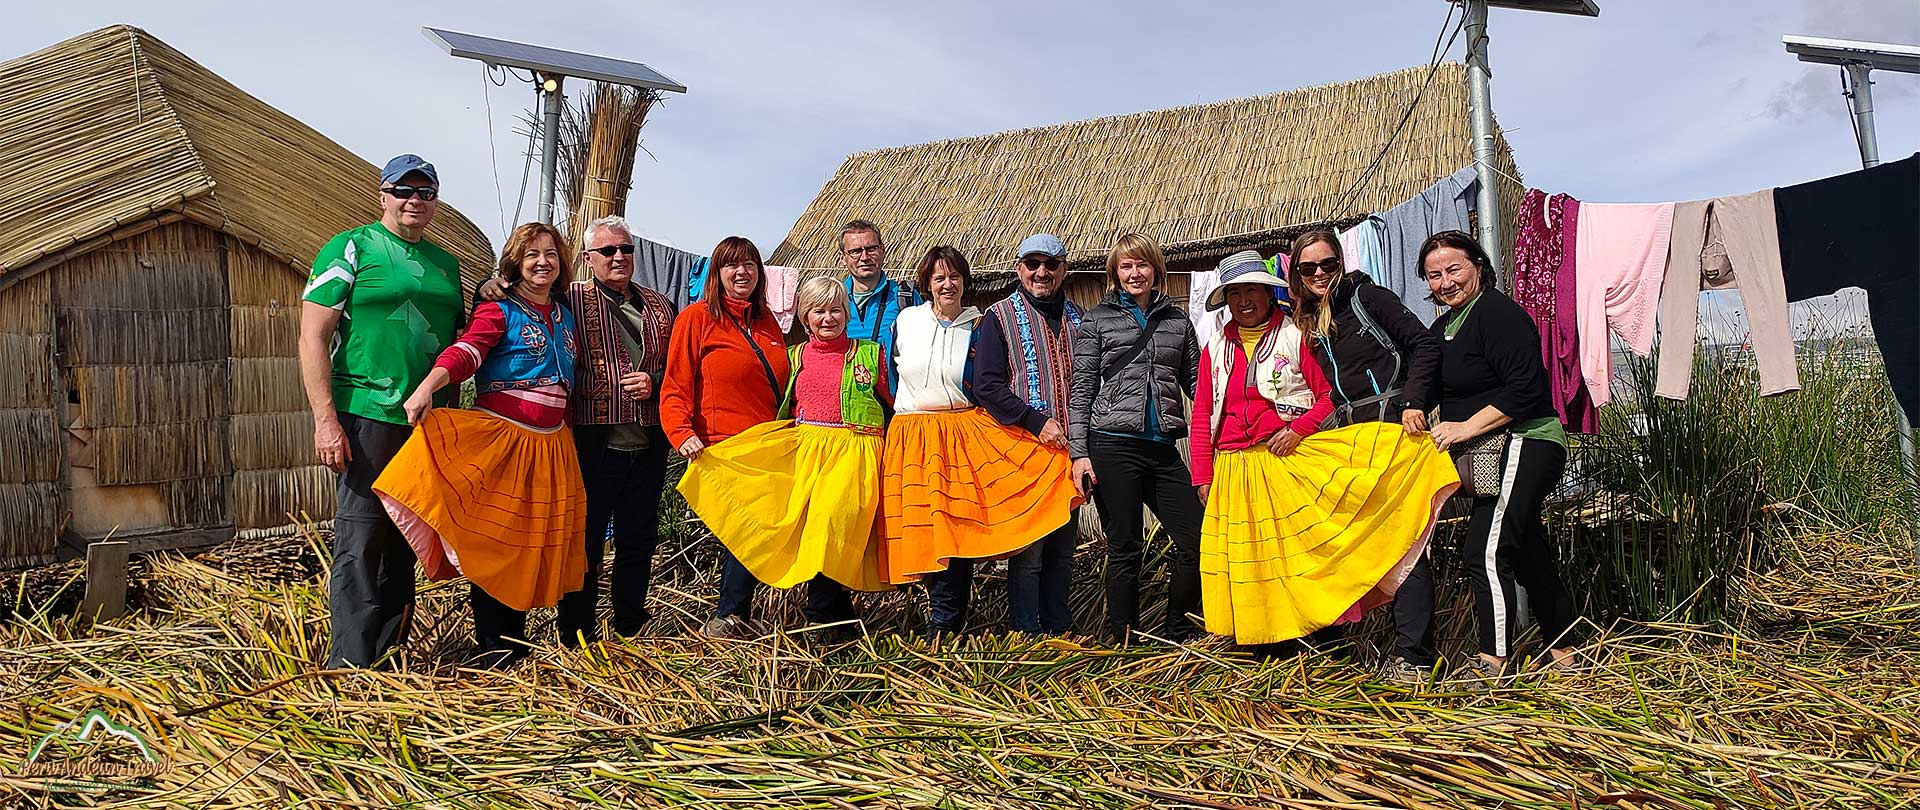 Lake Titicaca Tours